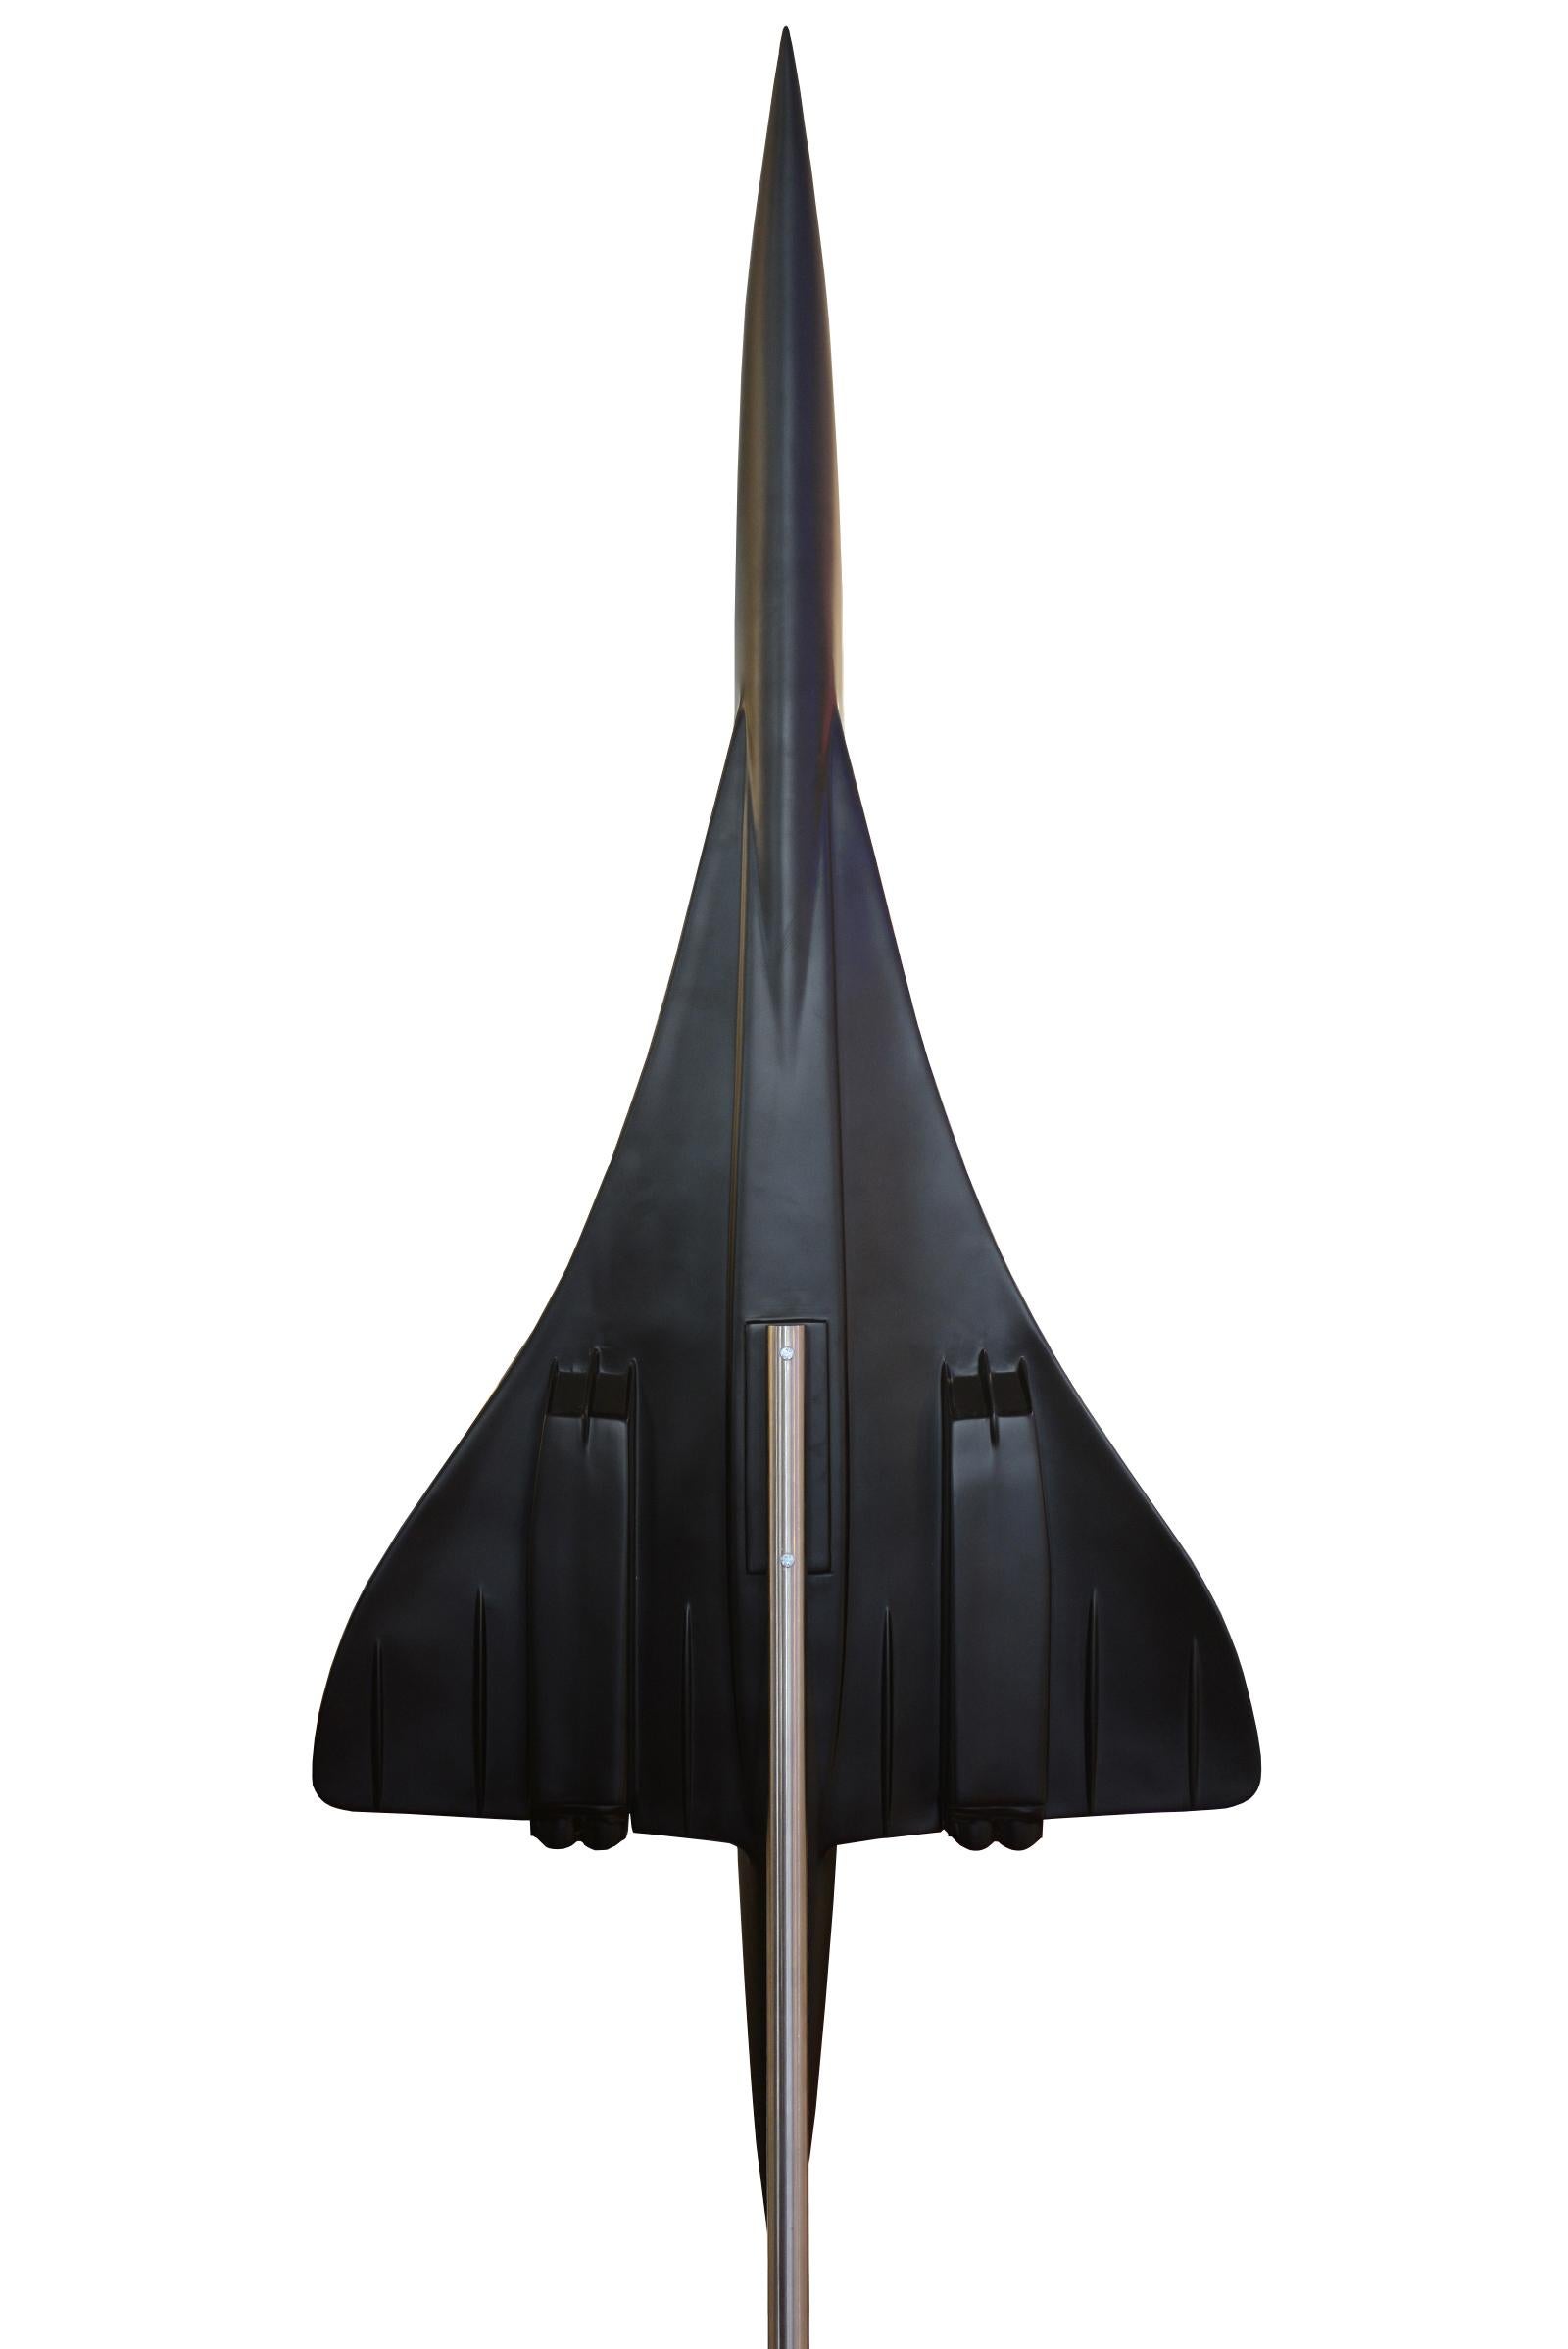 Concorde Model Black Sculpture In Excellent Condition For Sale In Paris, FR